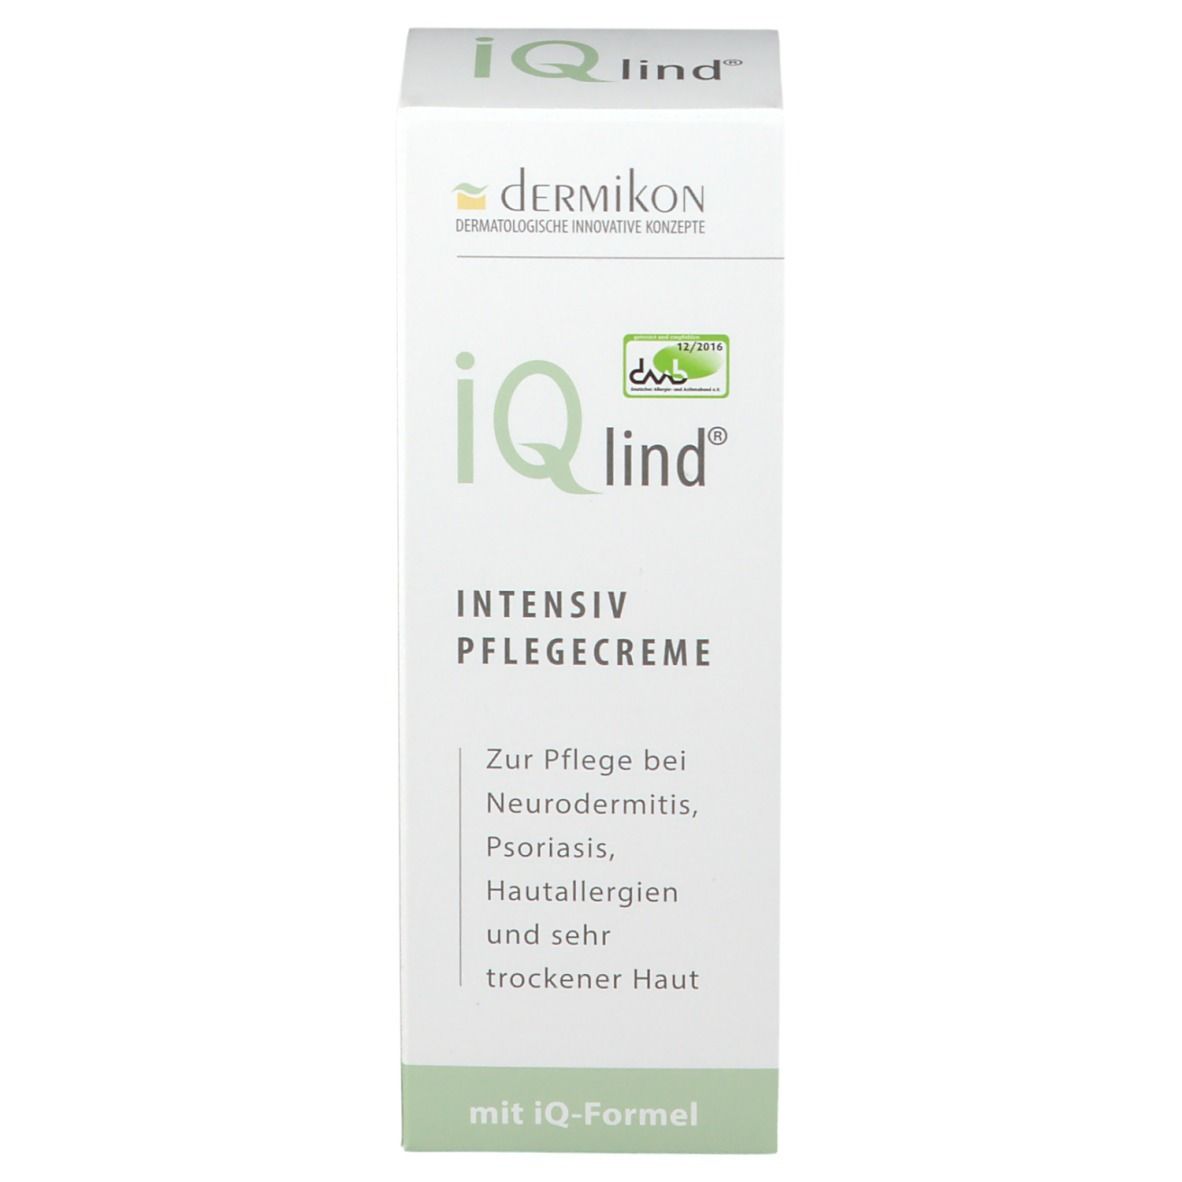 iQlind® Intensiv Pflegecreme